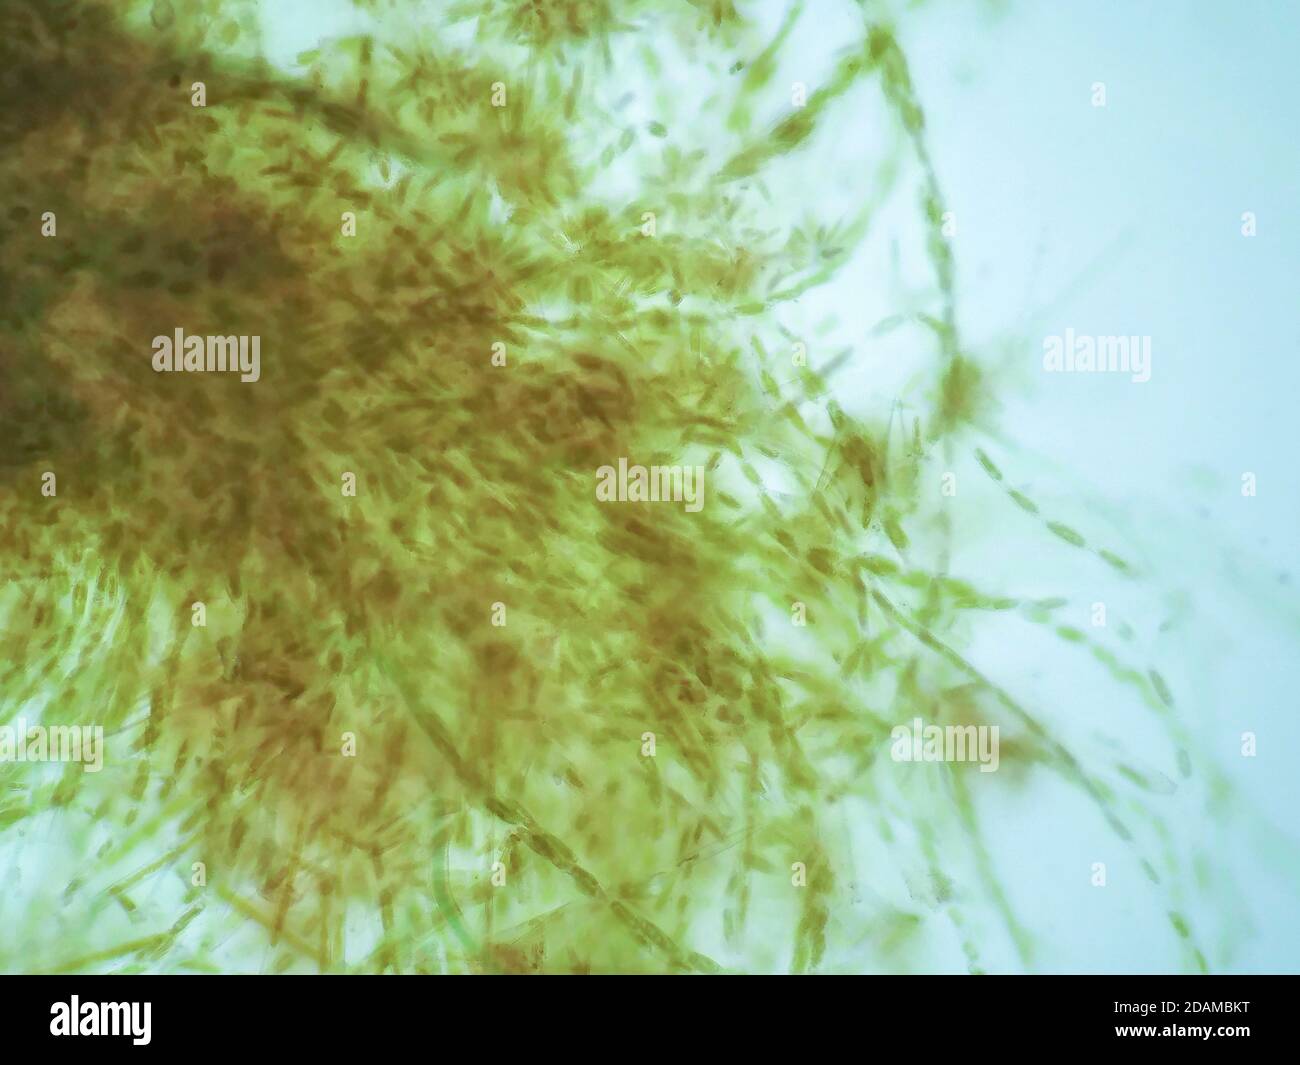 Algues filamenteuses, micrographe léger. Les algues filamenteuses sont des cellules d'algues simples qui forment de longues chaînes, fils ou filaments visibles. Banque D'Images